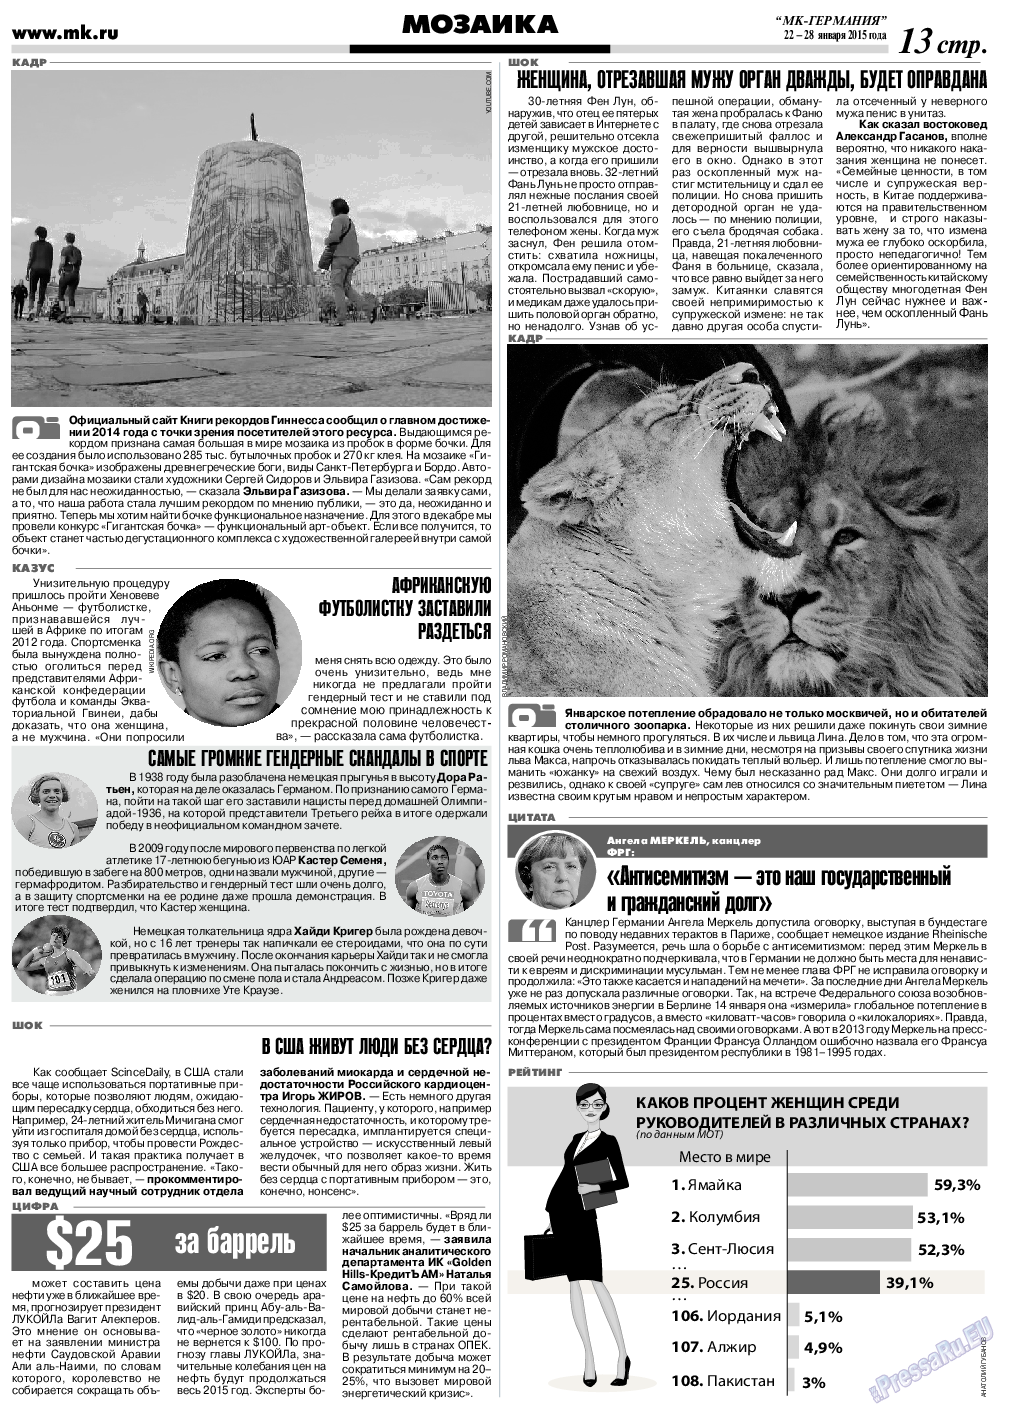 МК-Германия, газета. 2015 №4 стр.13